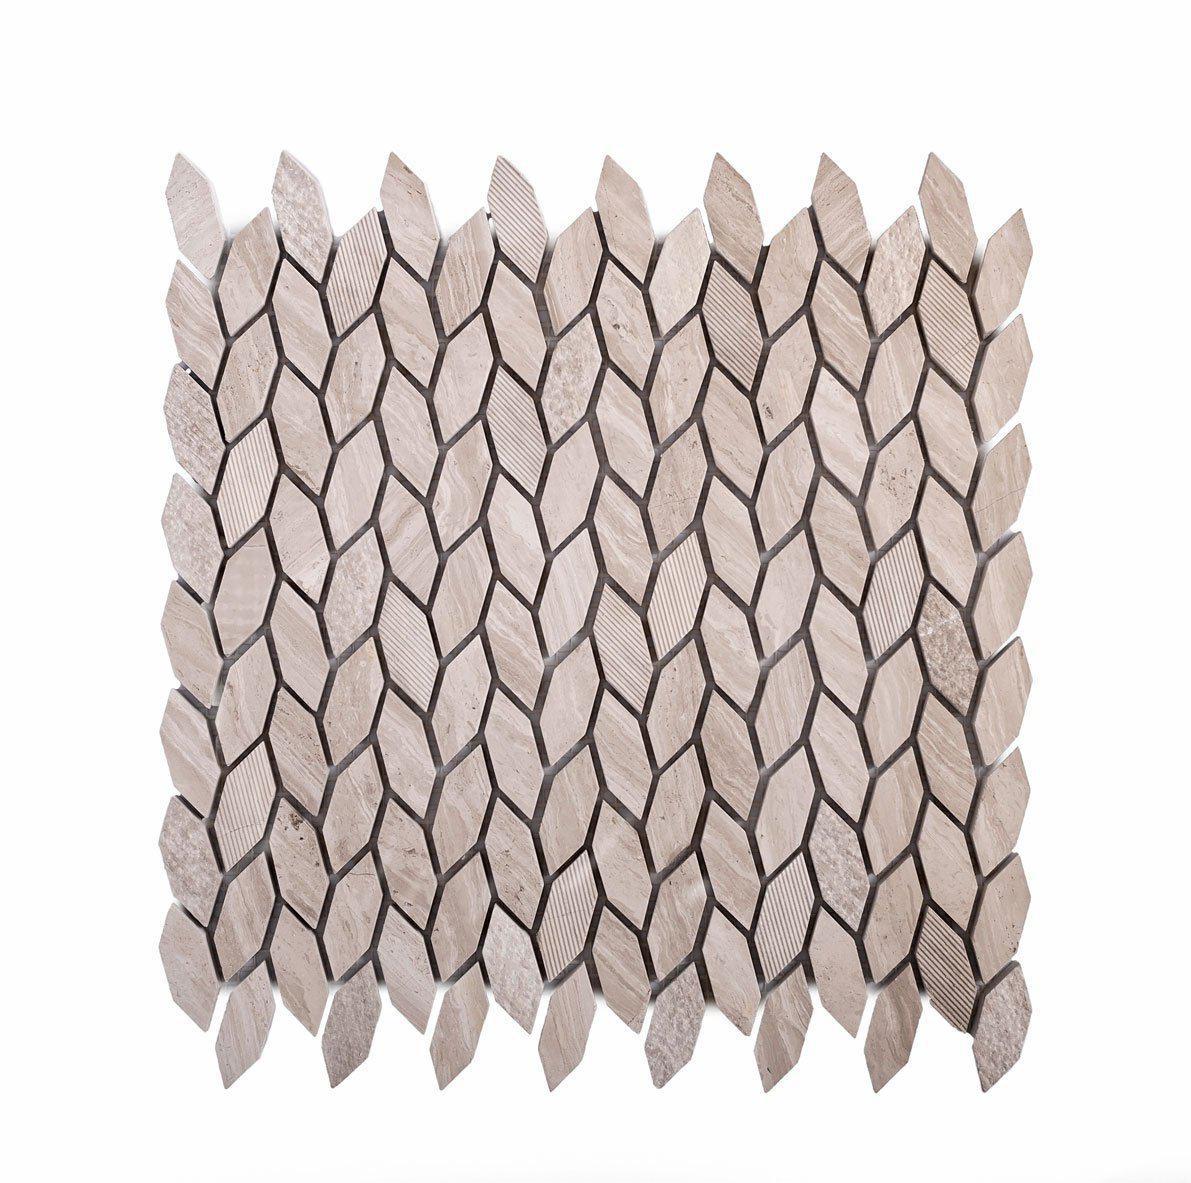 Textured Wooden Beige Leaf Marble Mosaic Tile Position: 2 